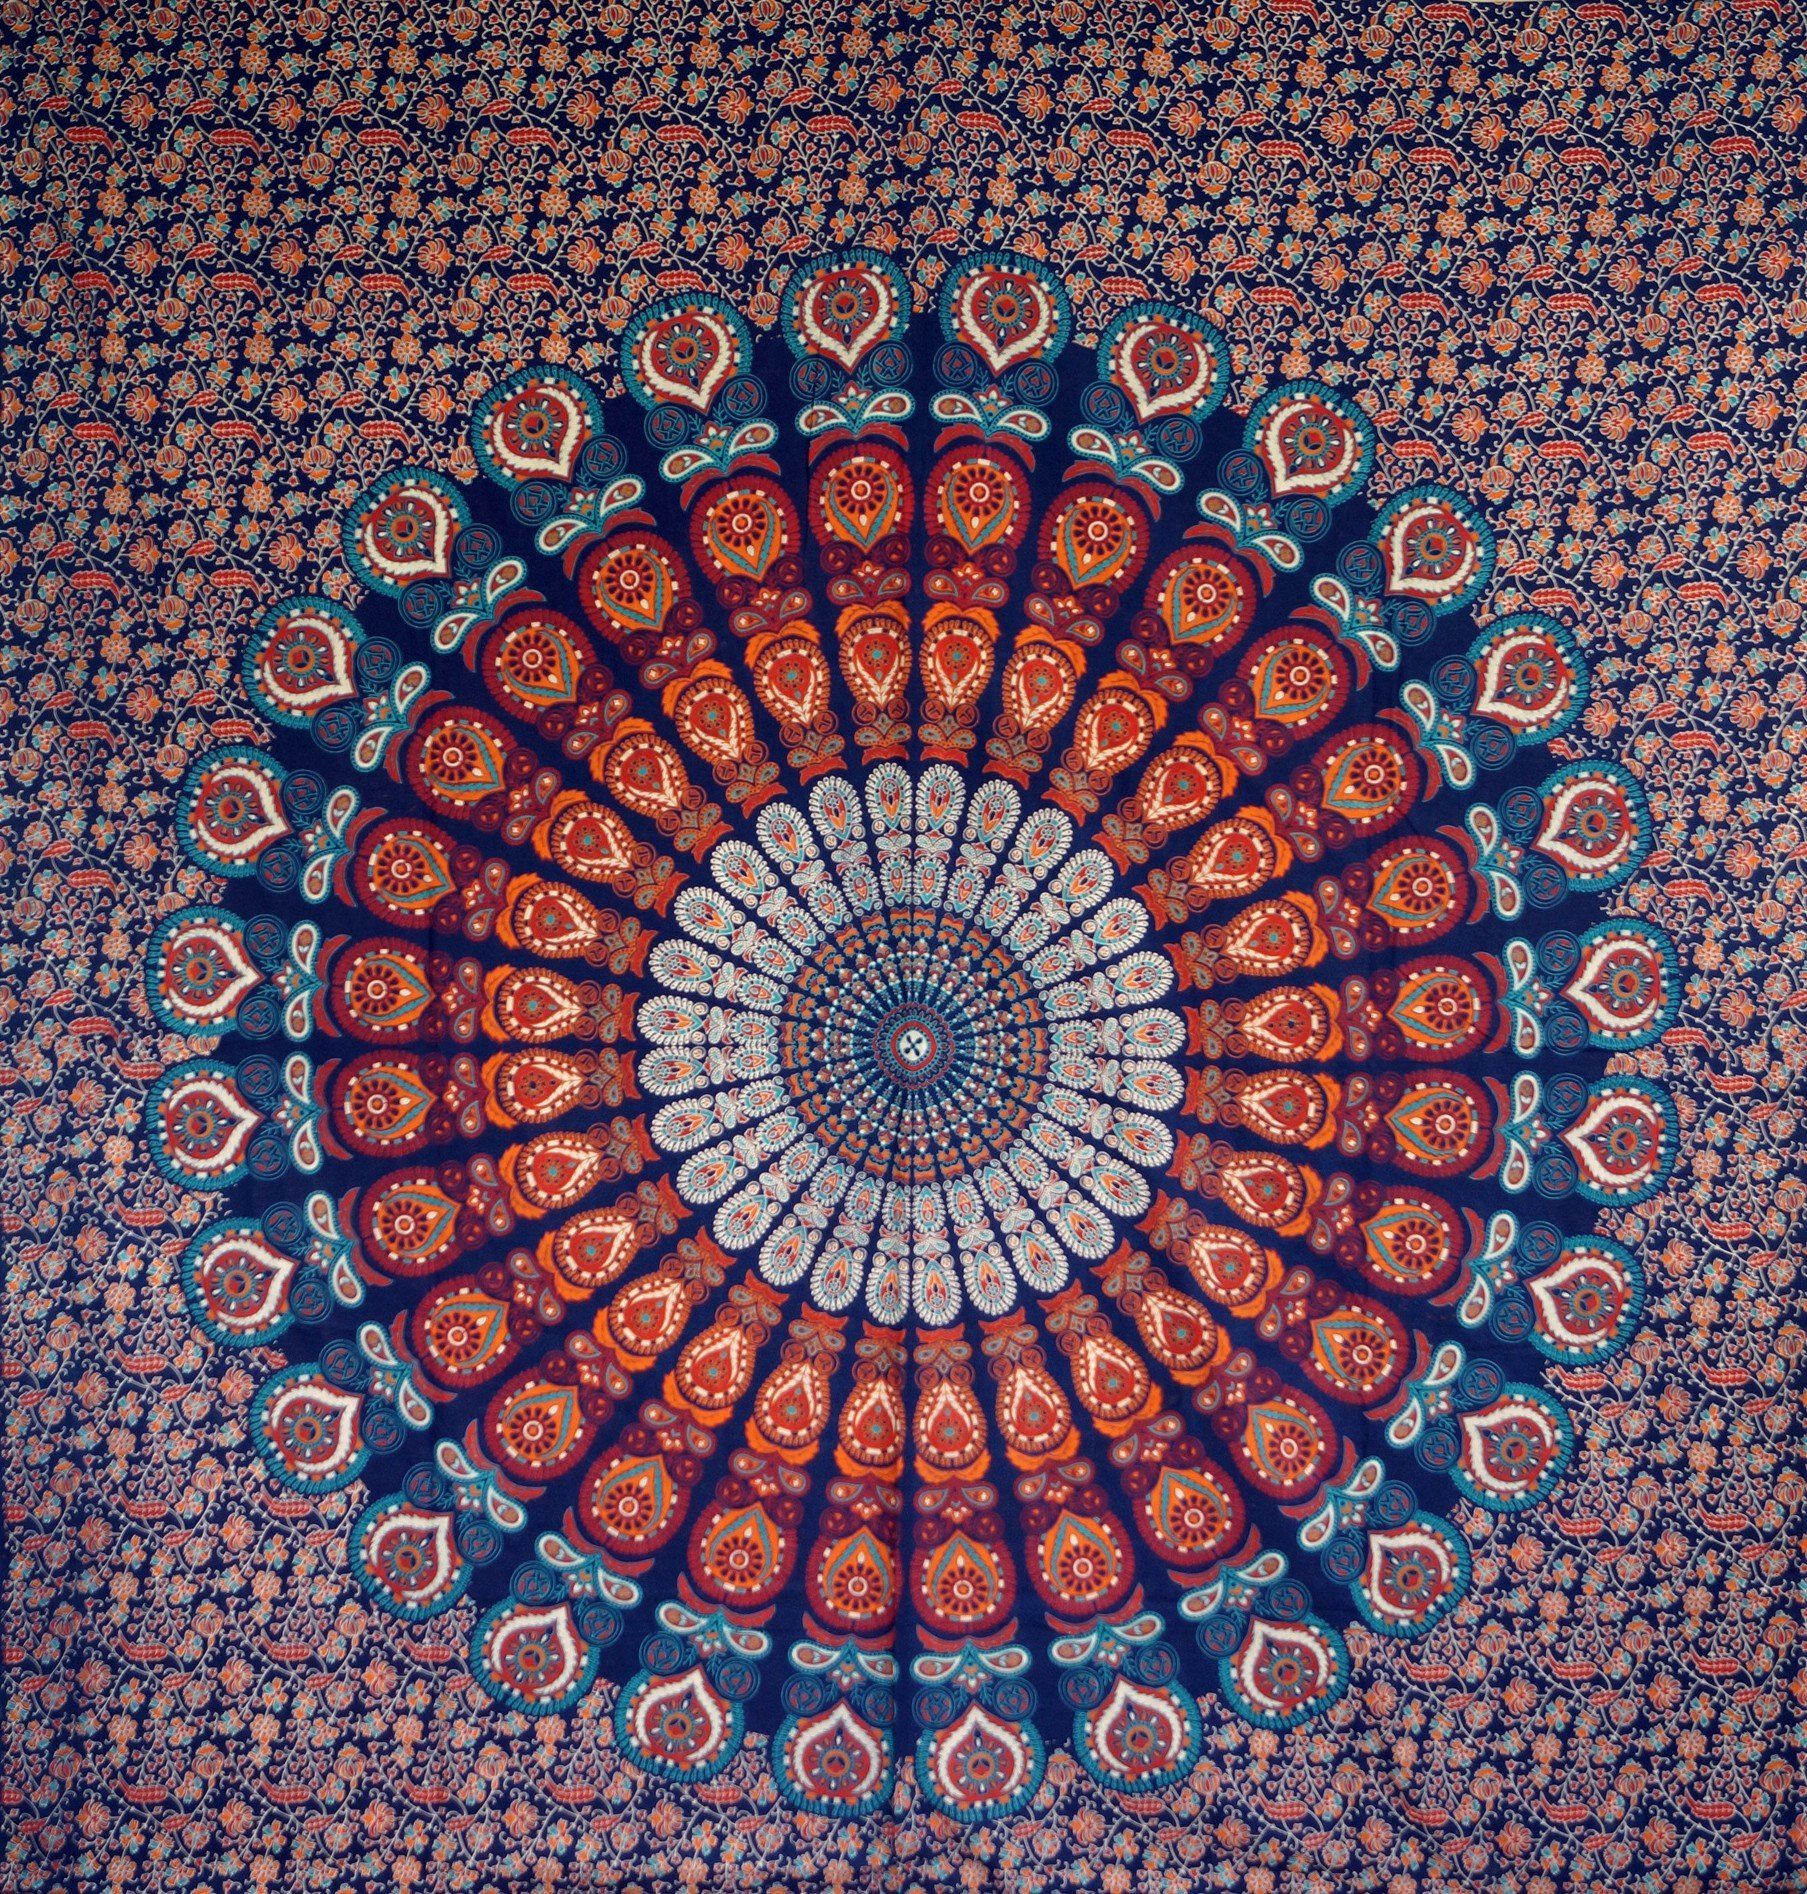 Wandbehang, Tagesdecke Tagesdecke.., indische Boho-Style Guru-Shop